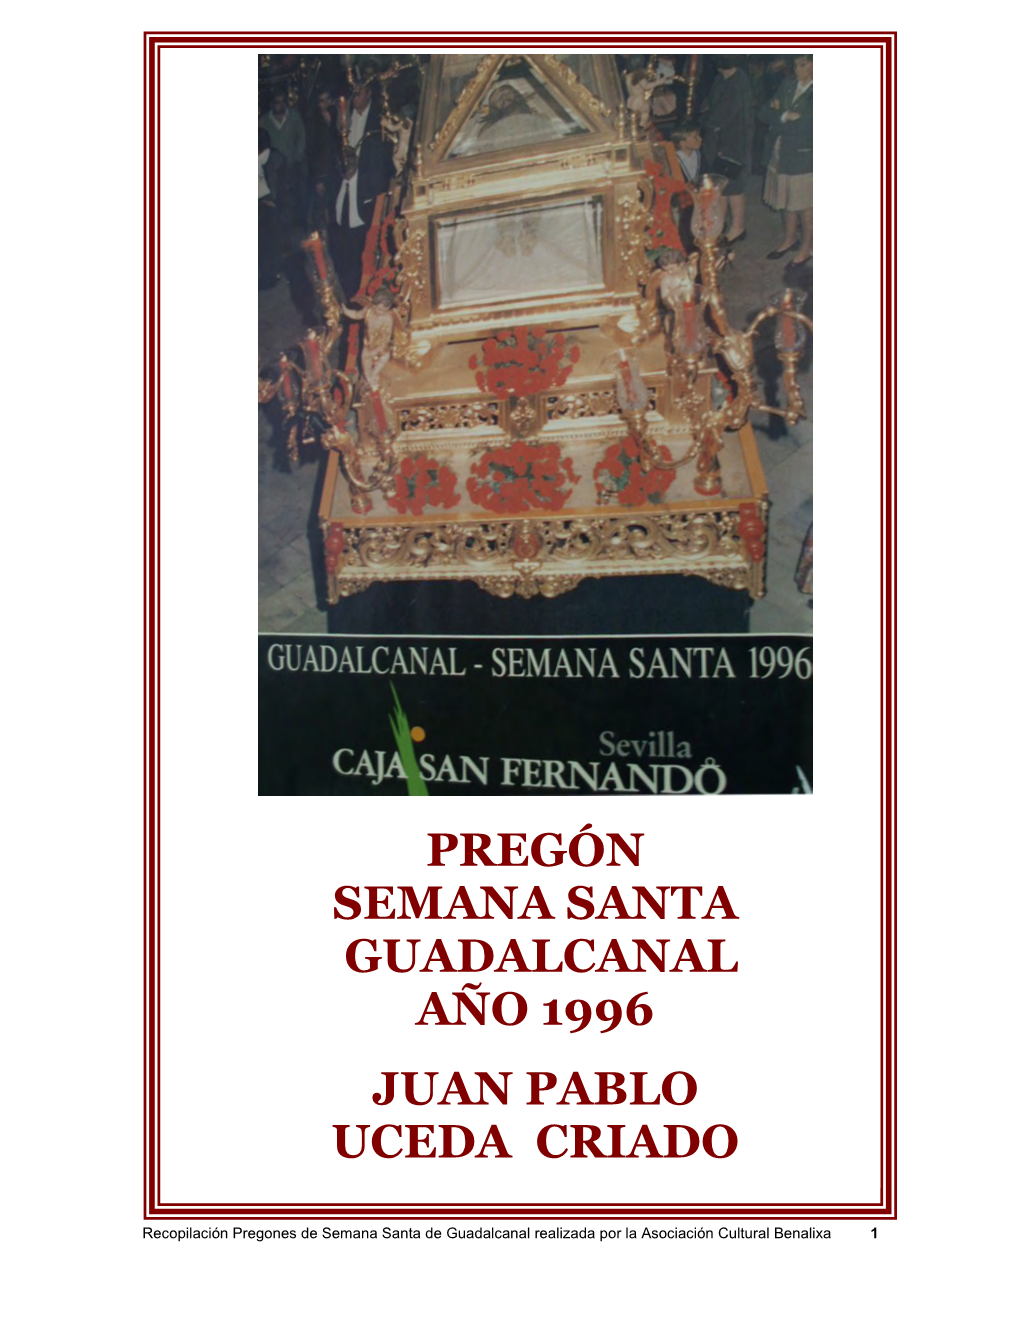 Pregón Semana Santa Guadalcanal Año 1996 Juan